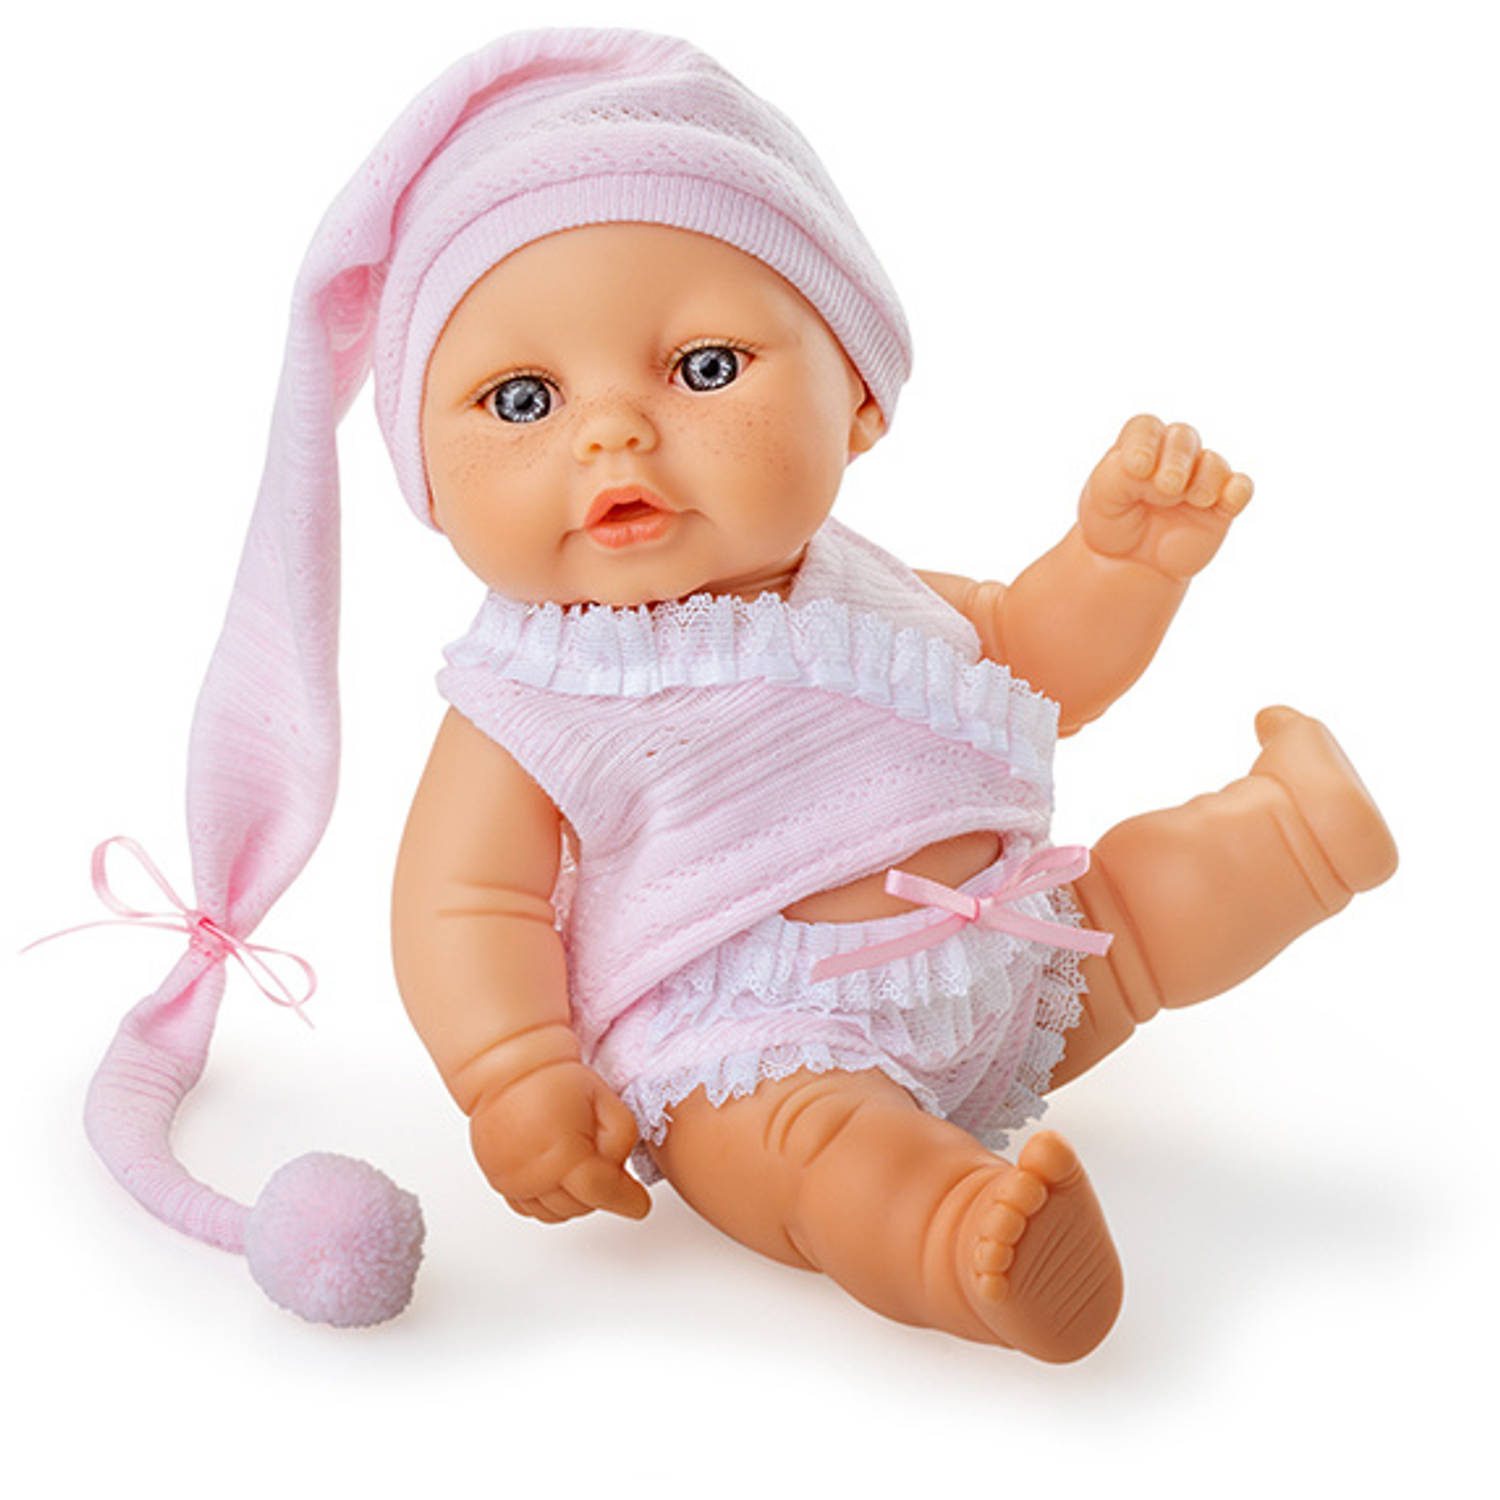 Atticus raken Baby Berjuan babypop Mini Baby 20 cm meisjes lichtroze | Blokker